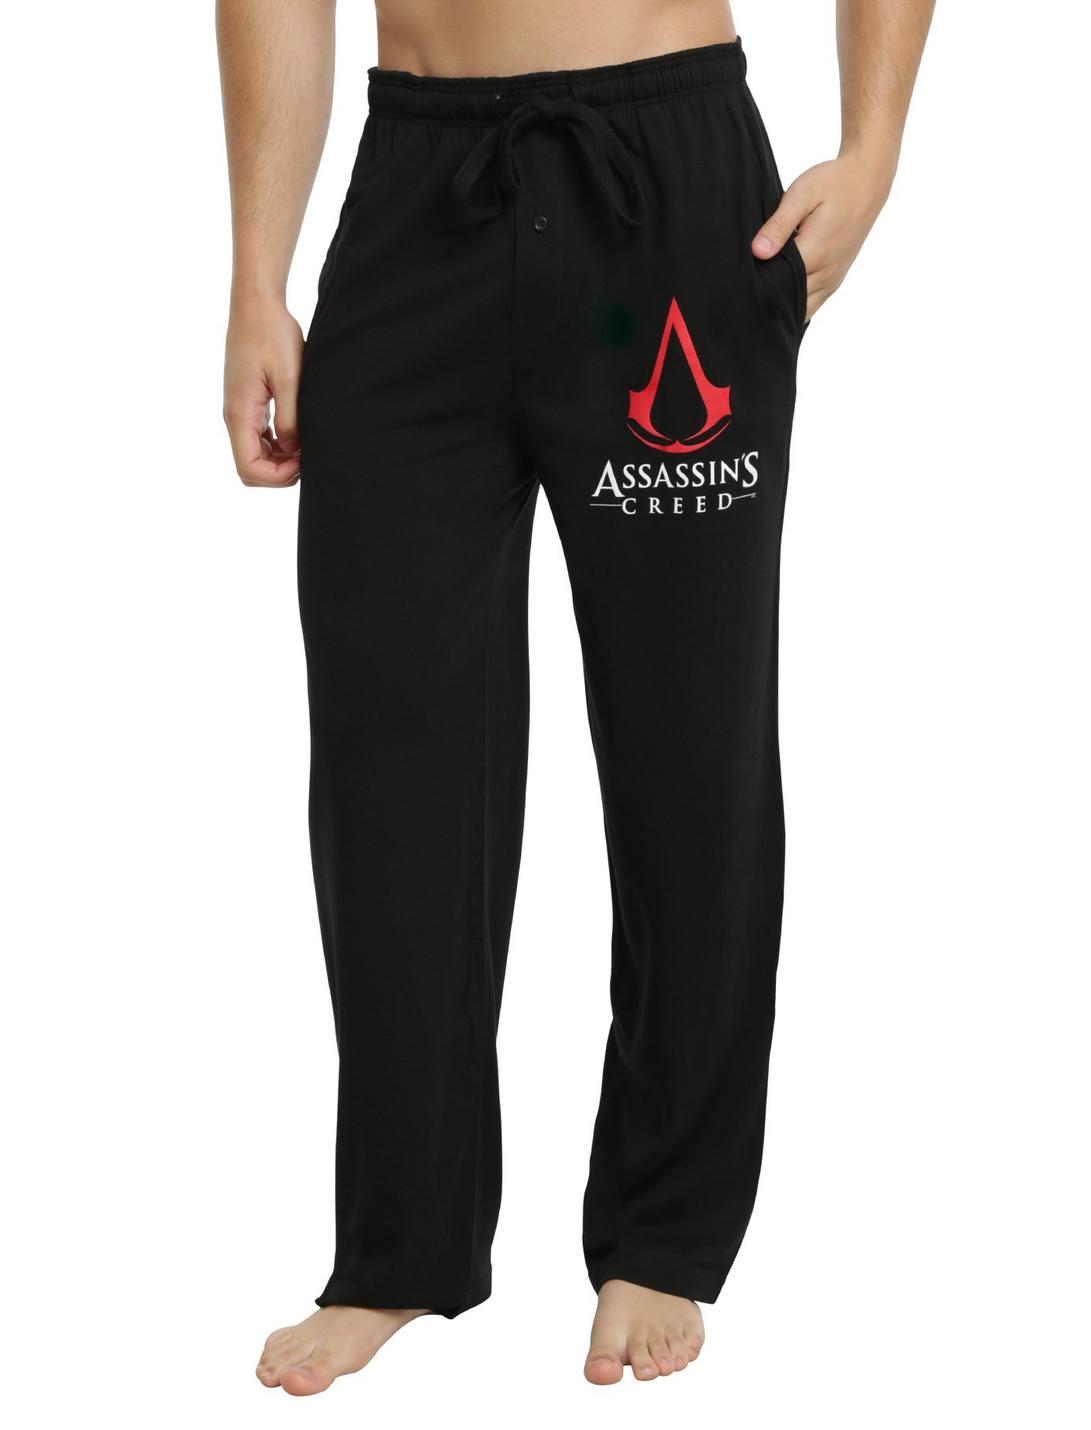 Assassin's Creed Logo Guys Pajama Pants, BLACK, hi-res